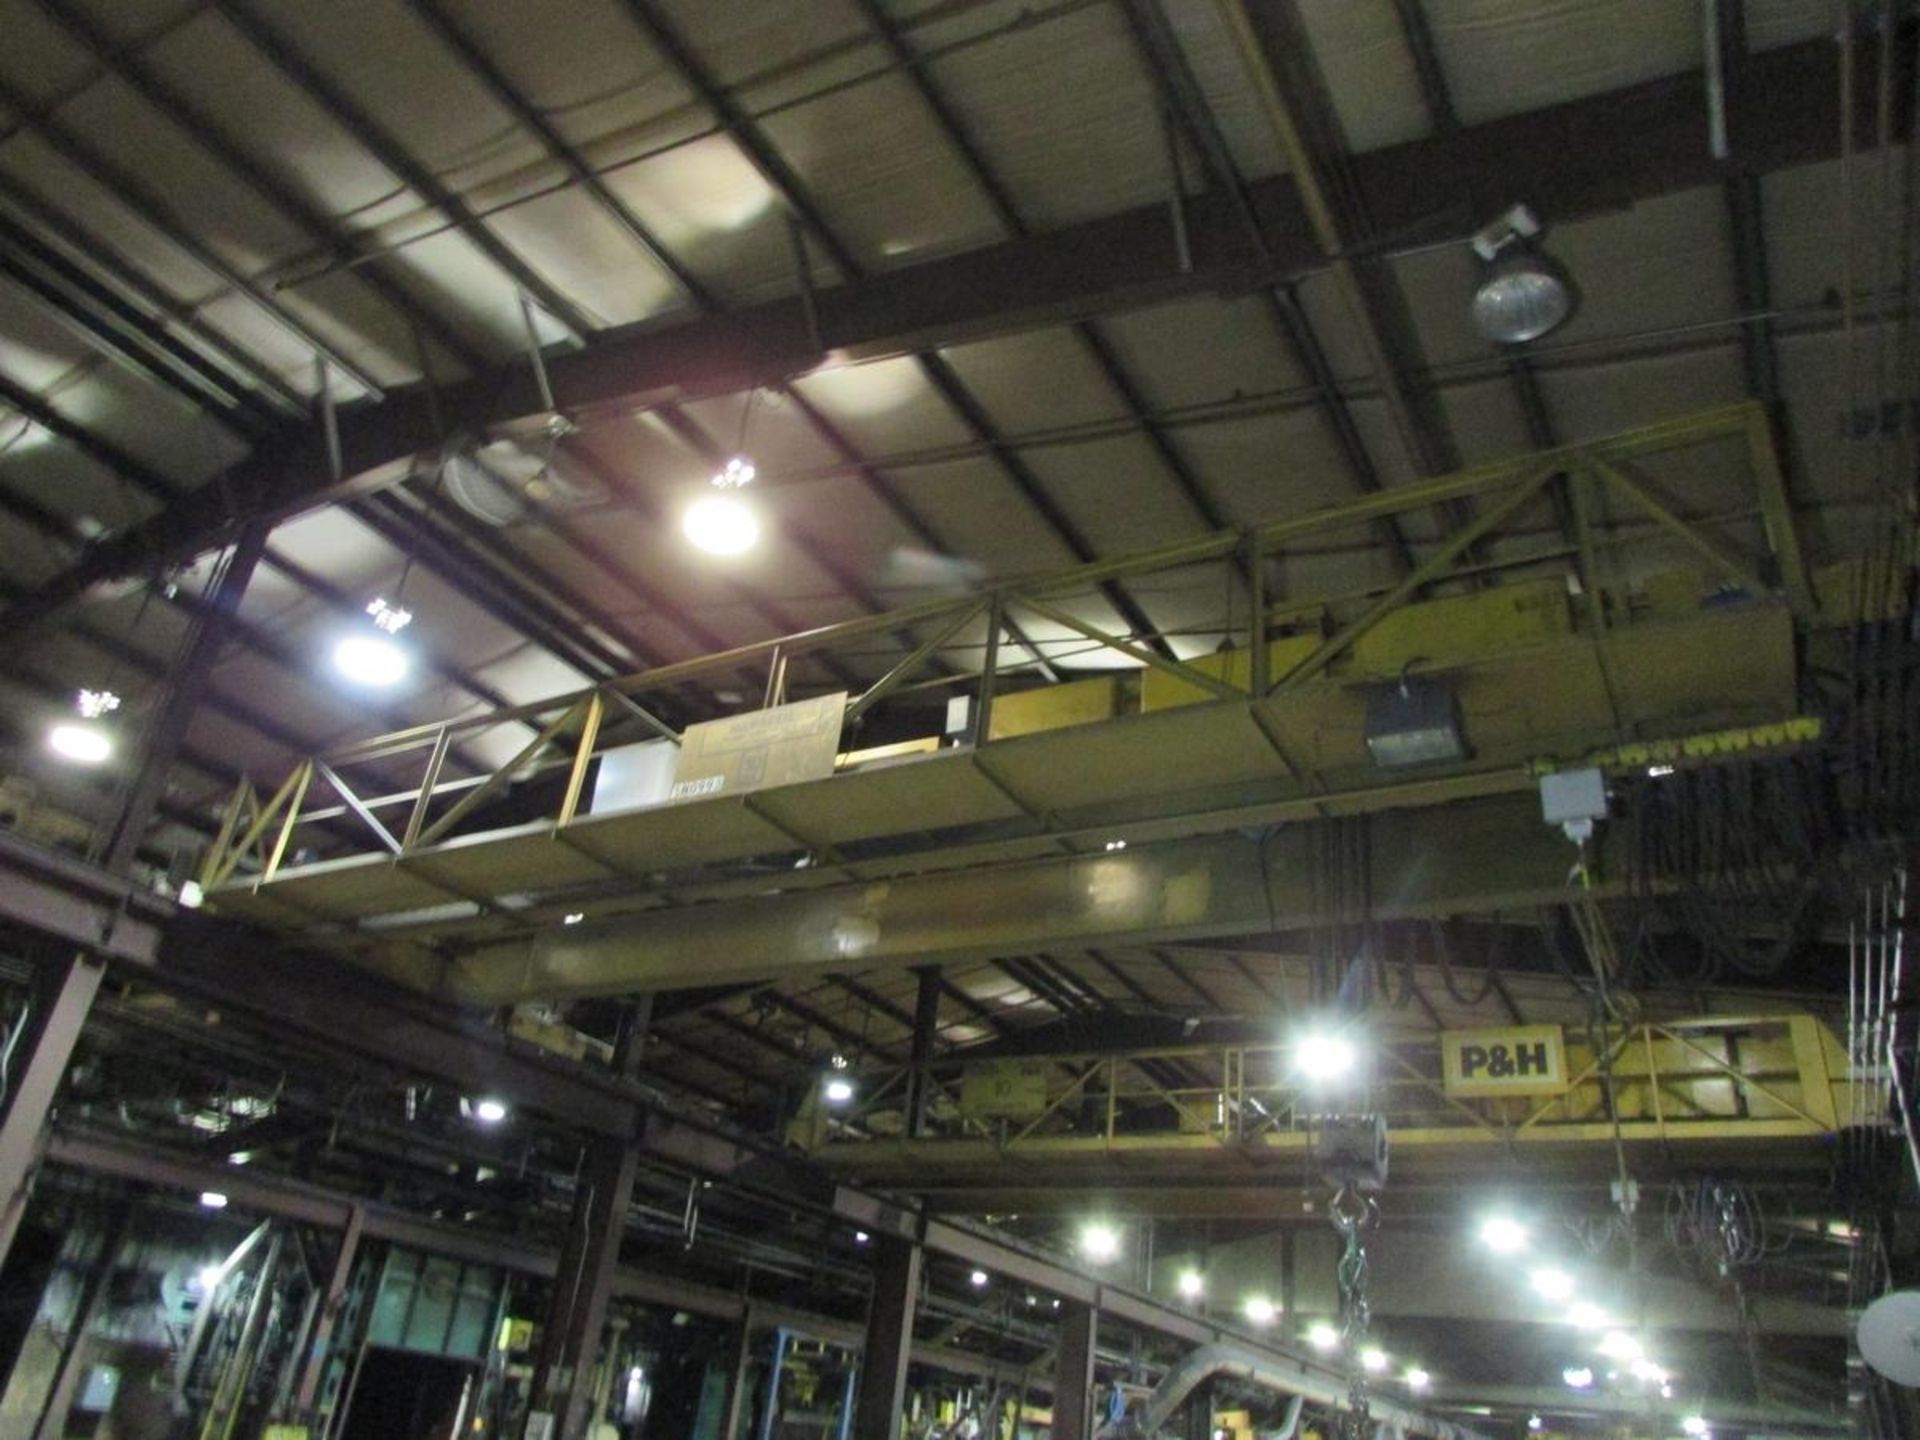 Milwaukee Crane 10 Ton Top Running Double Girder Bridge Crane [Late Delivery] - Image 4 of 6